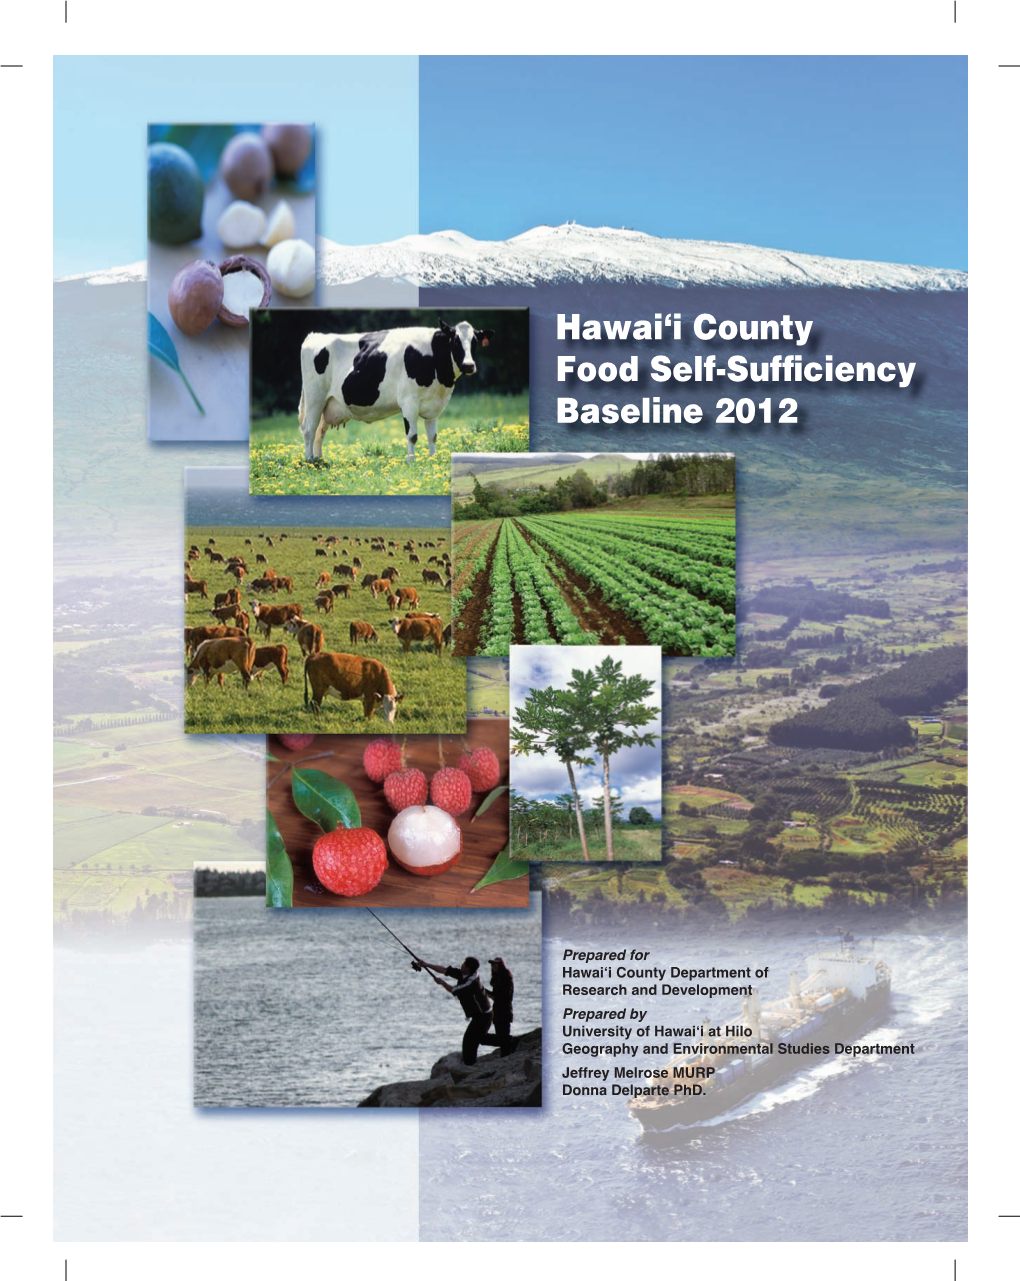 Hawaii County Food Self-Sufficiency Baseline 2012